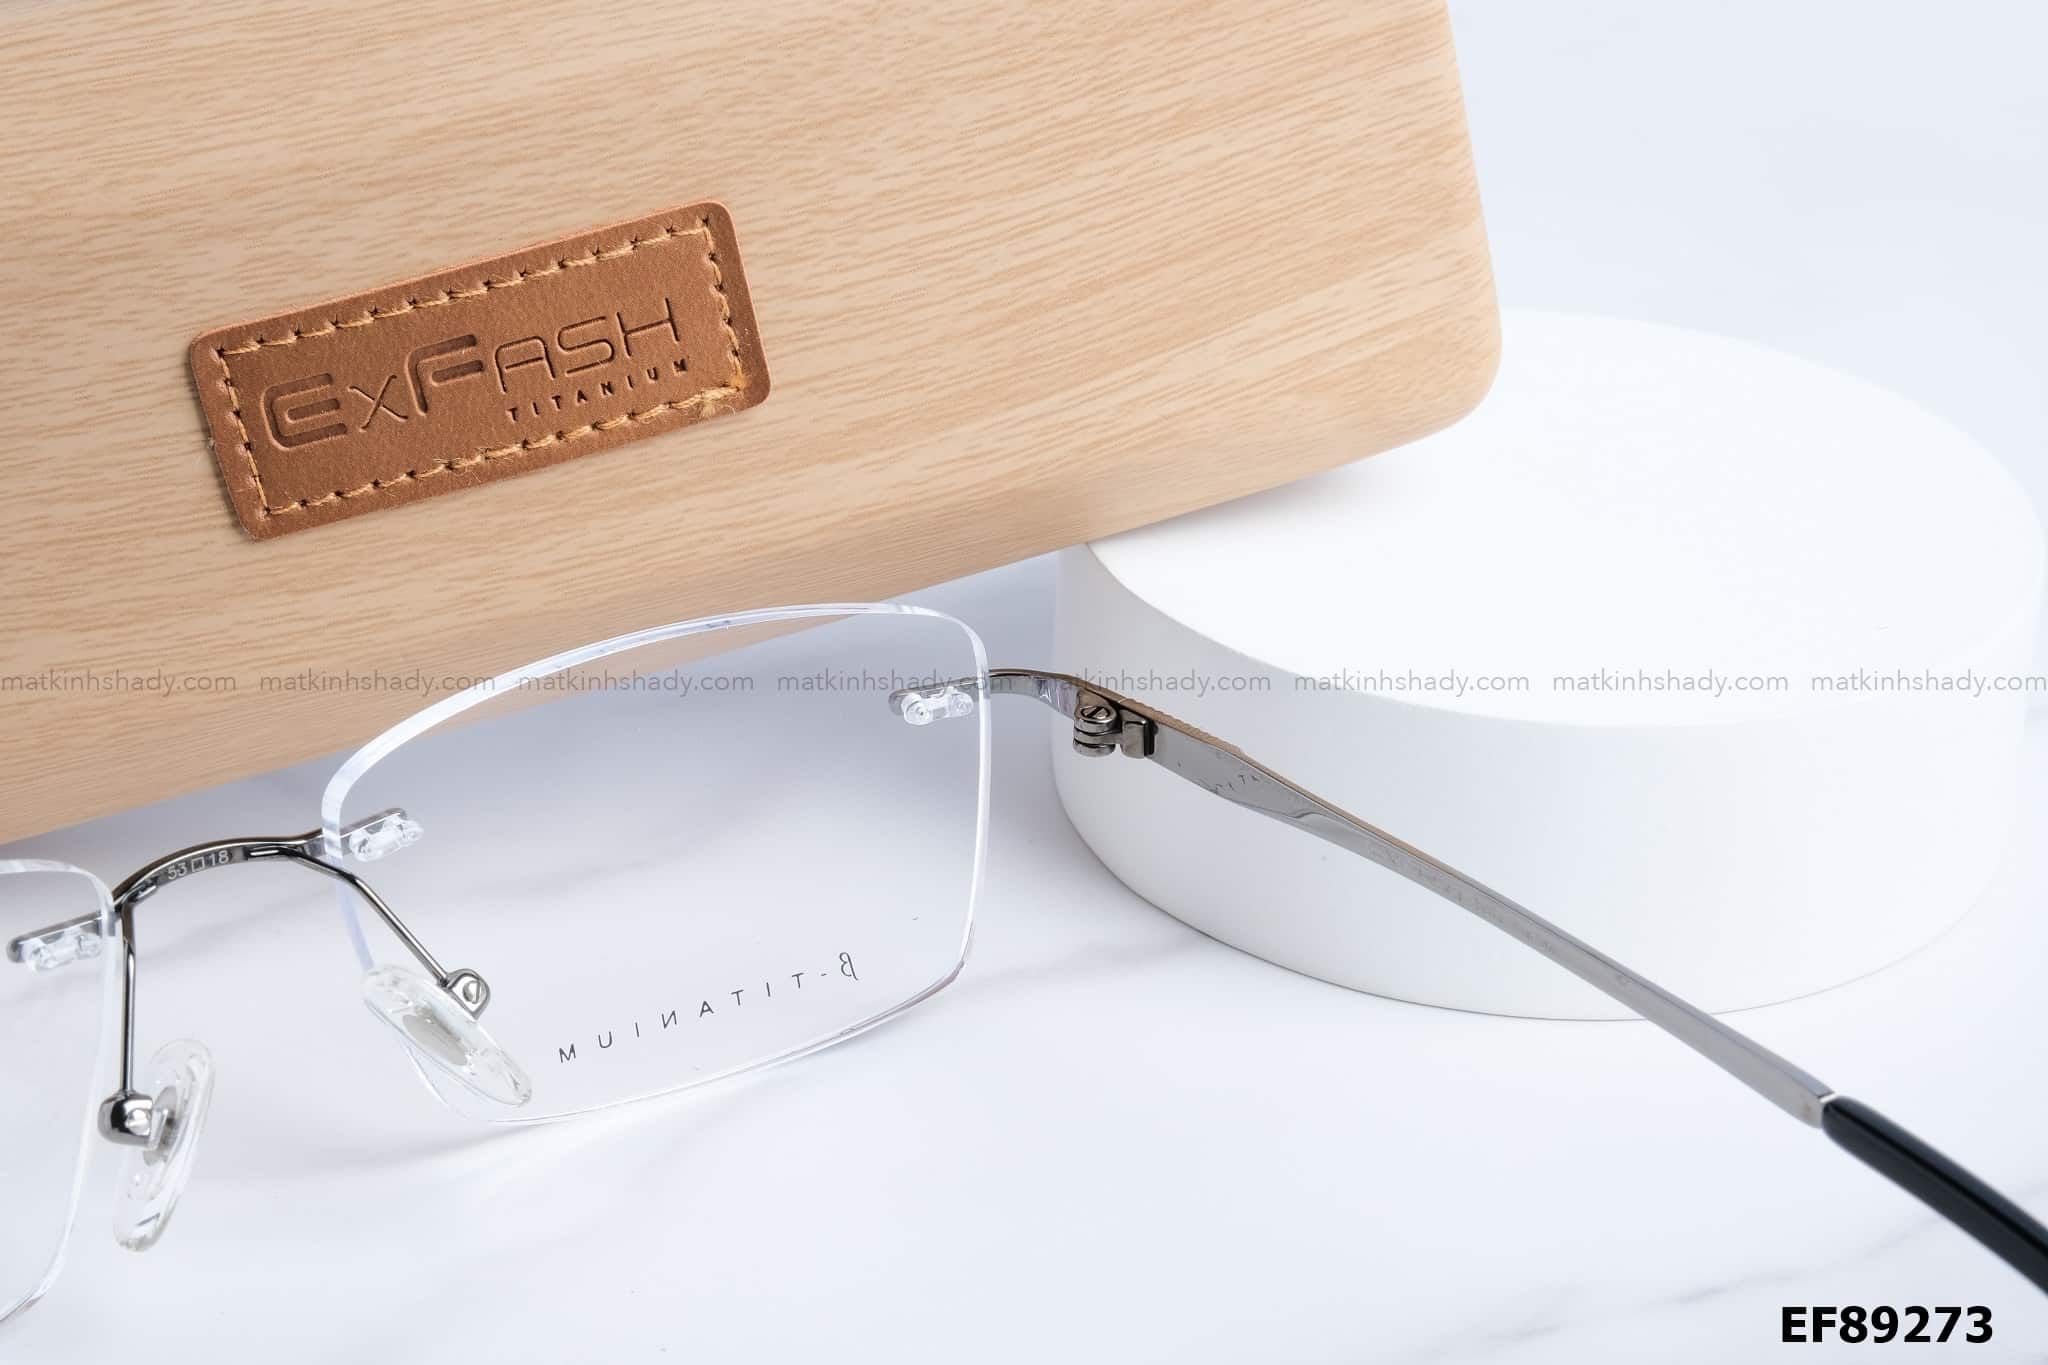  Exfash Eyewear - Glasses - EF89273 